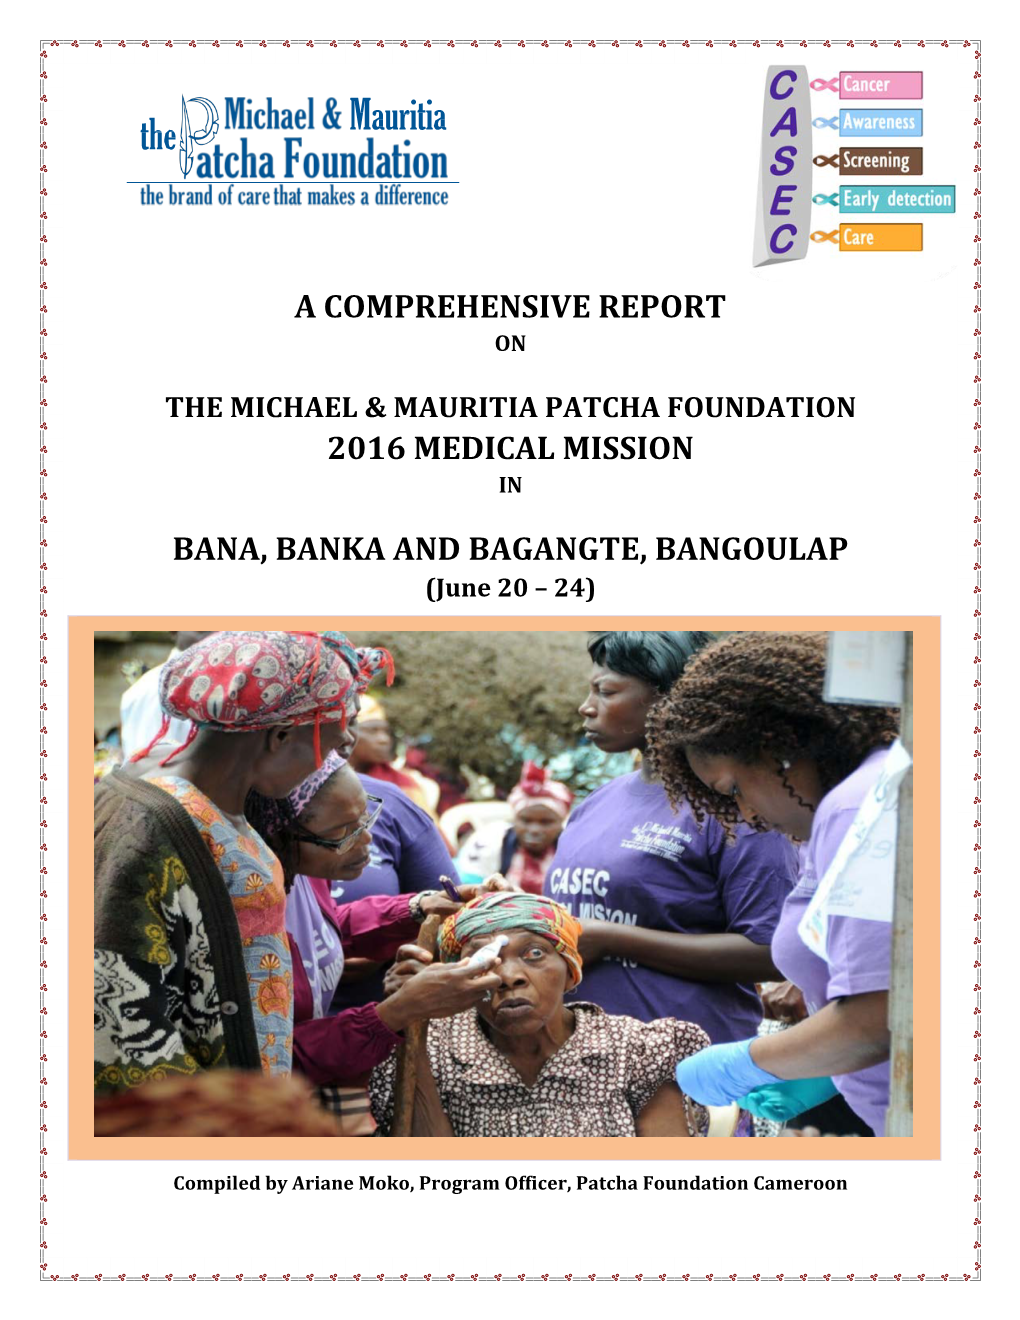 A Comprehensive Report 2016 Medical Mission Bana, Banka